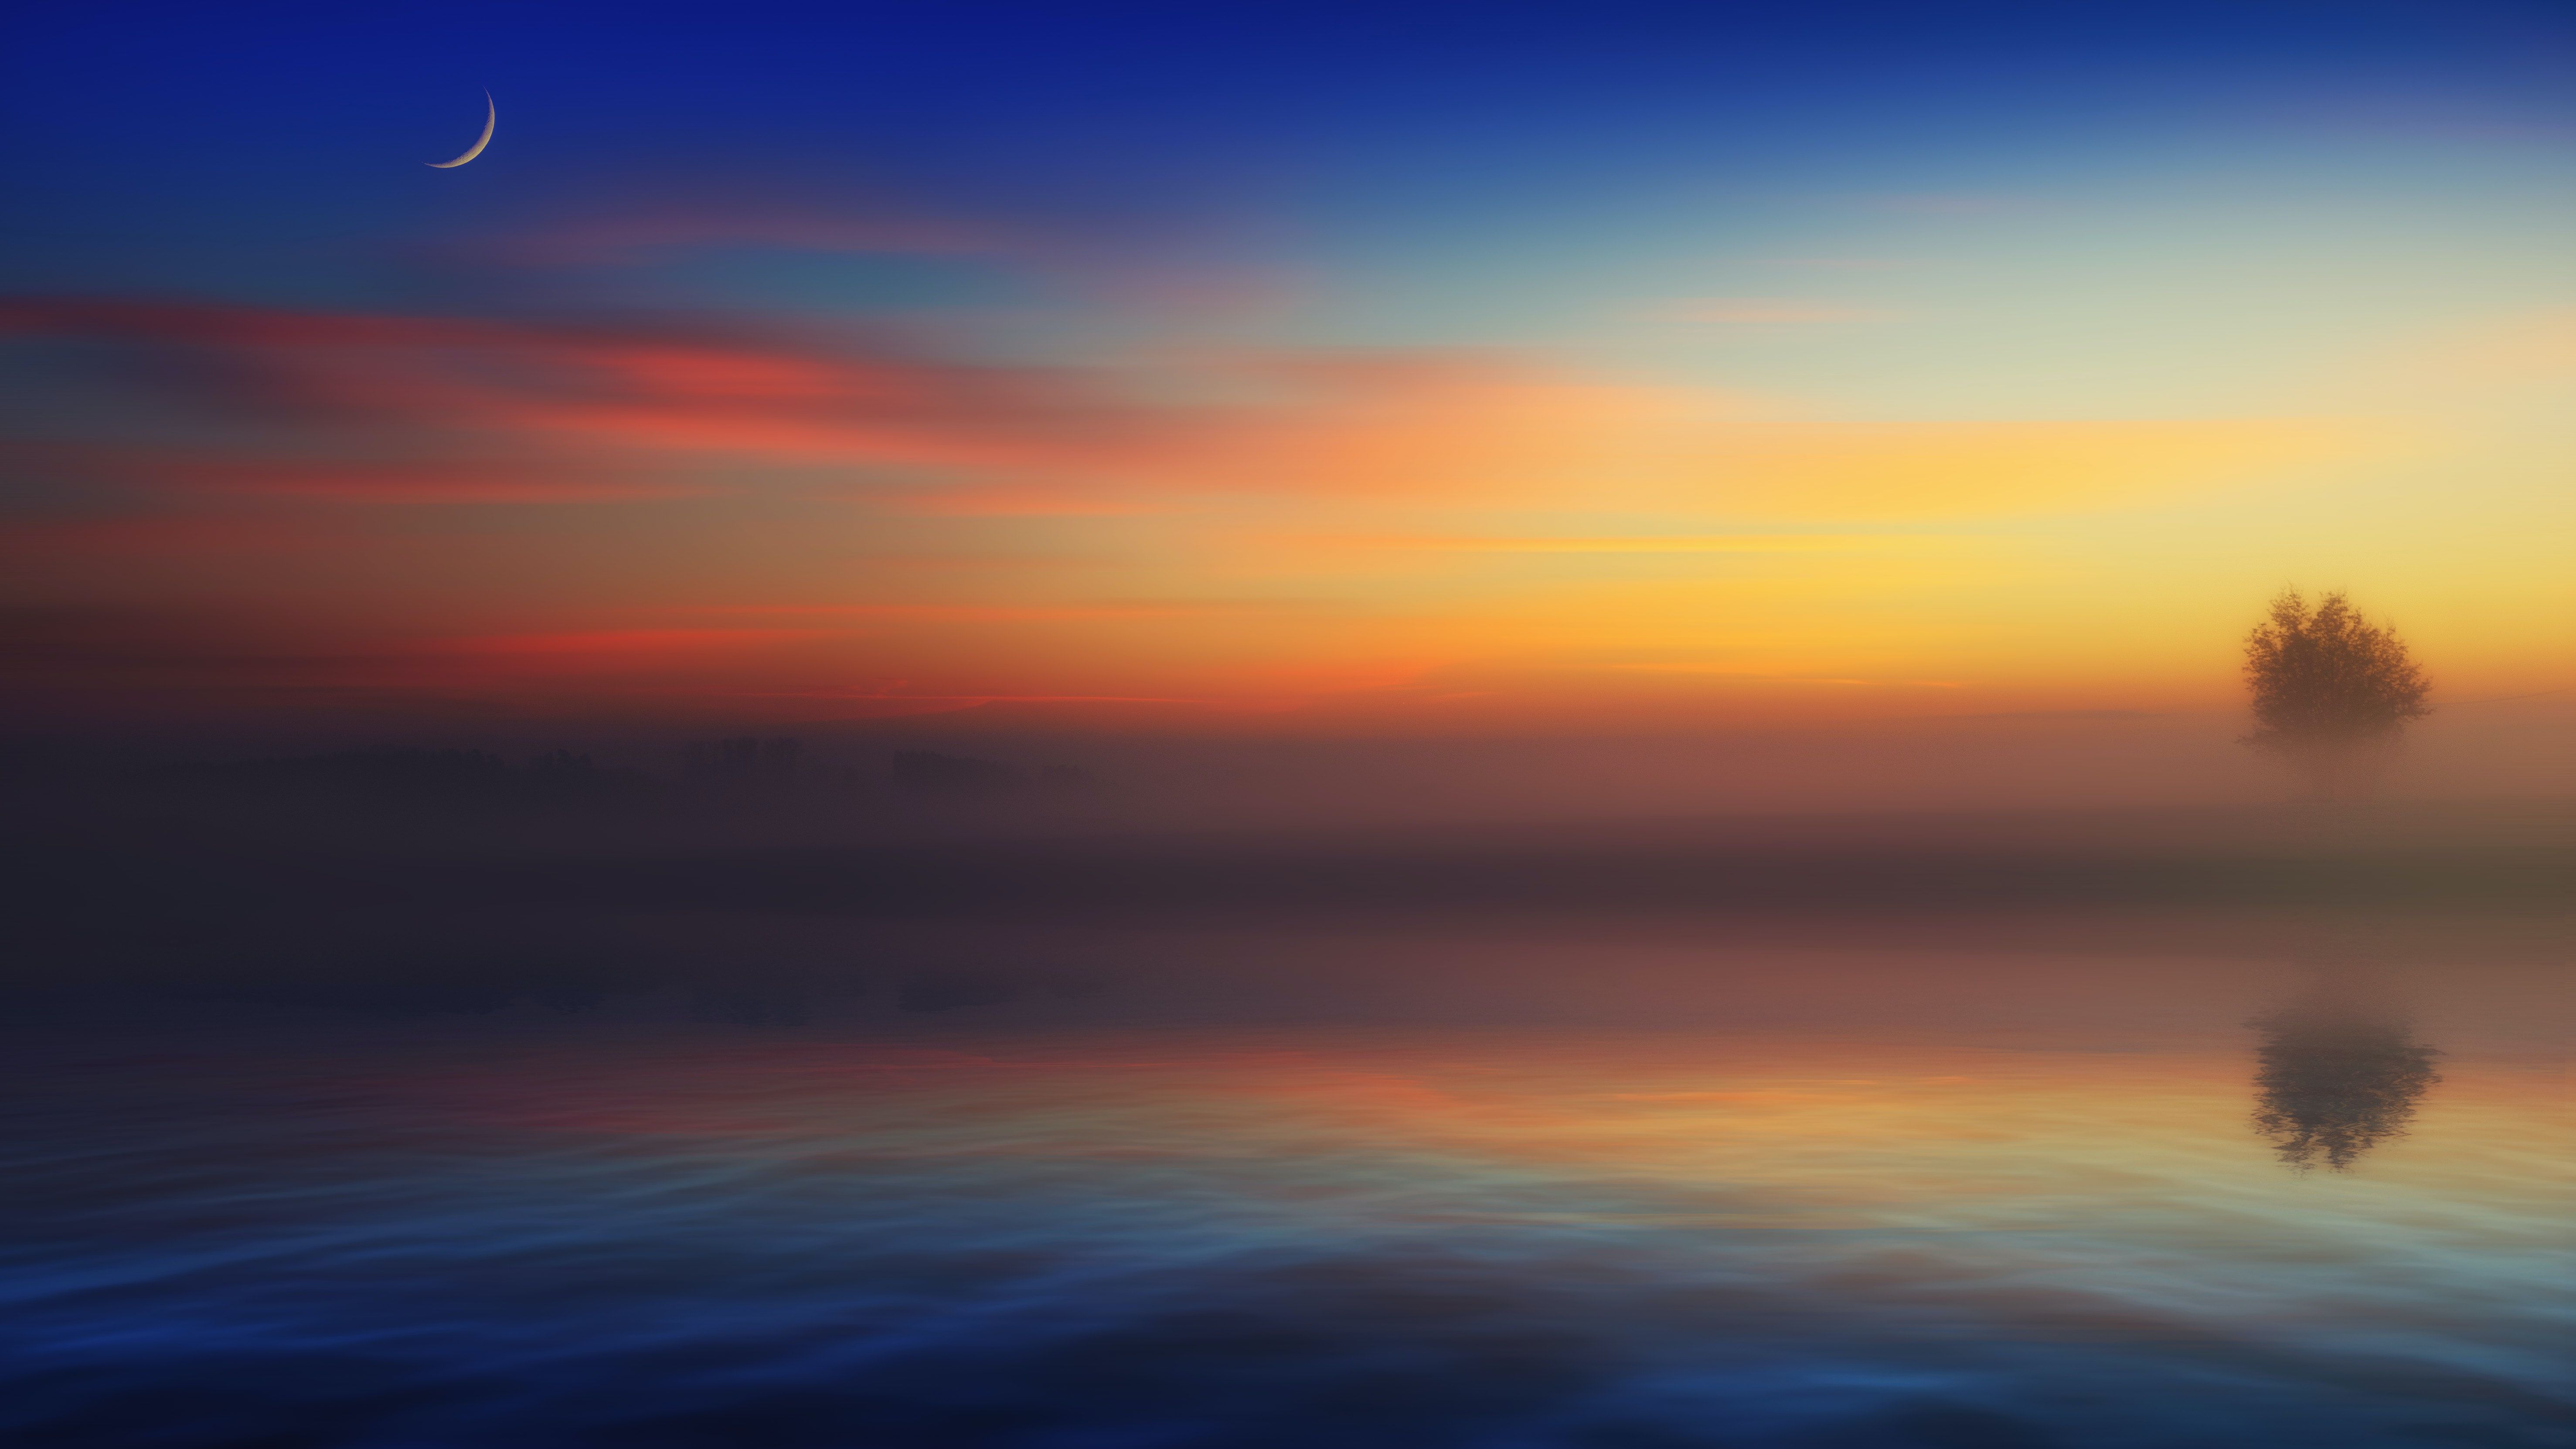 Horizon 4K Wallpaper, Landscape, River, Morning fog, Crescent Moon, 5K, Nature